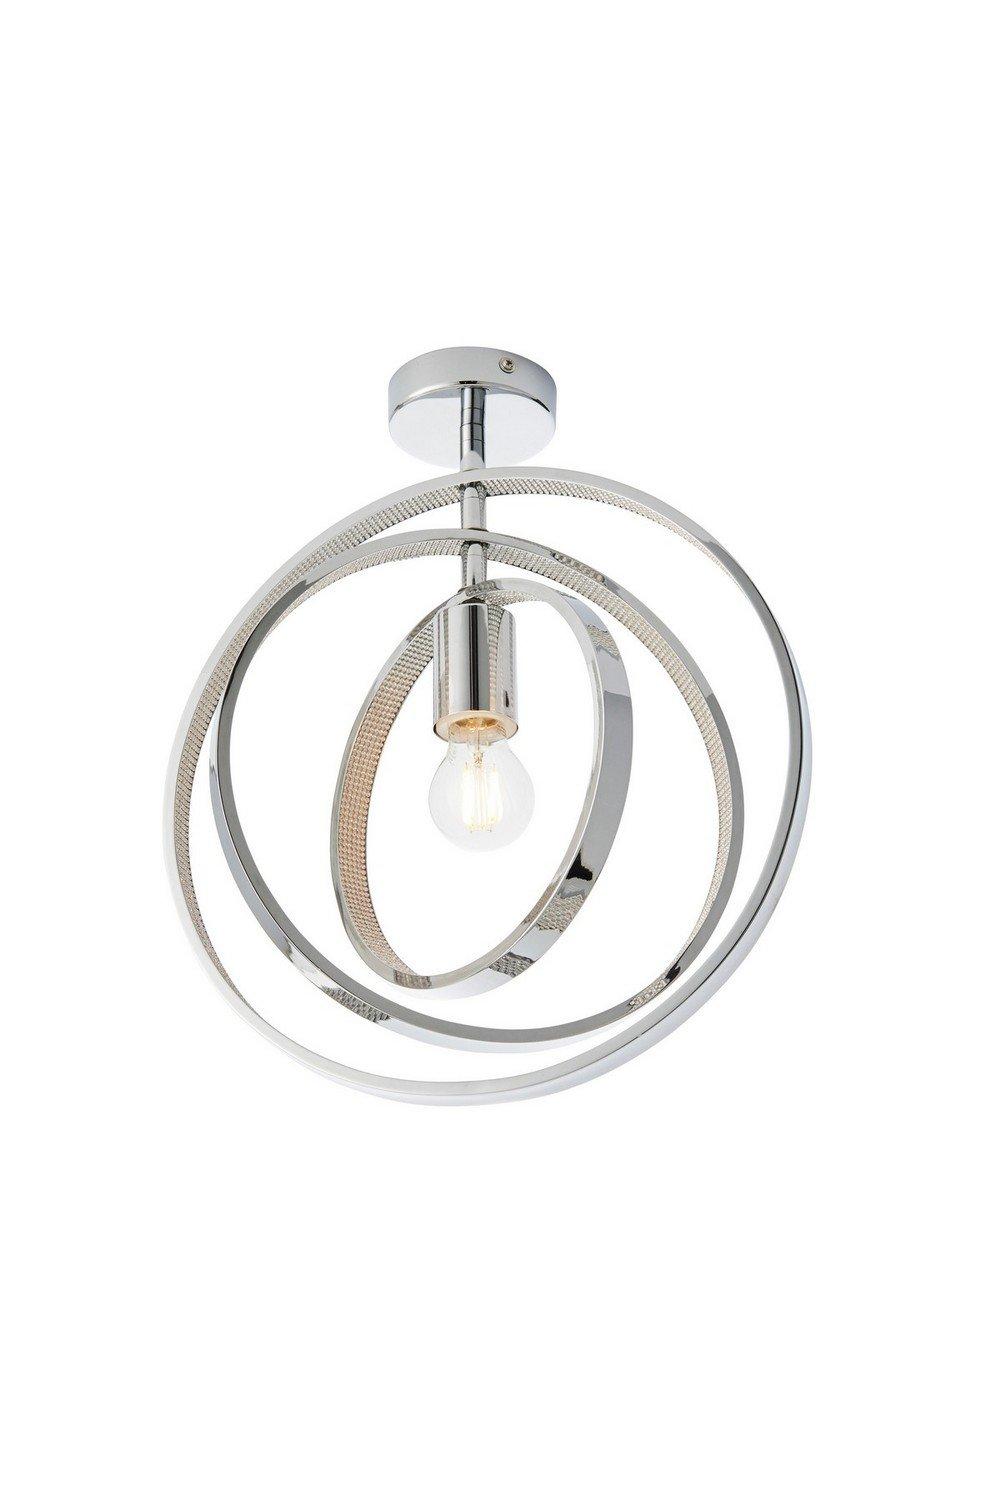 Merola Contemporary Designer Crystal LED Spherical Semi Flush Ceiling Light Chrome Warm White IP44